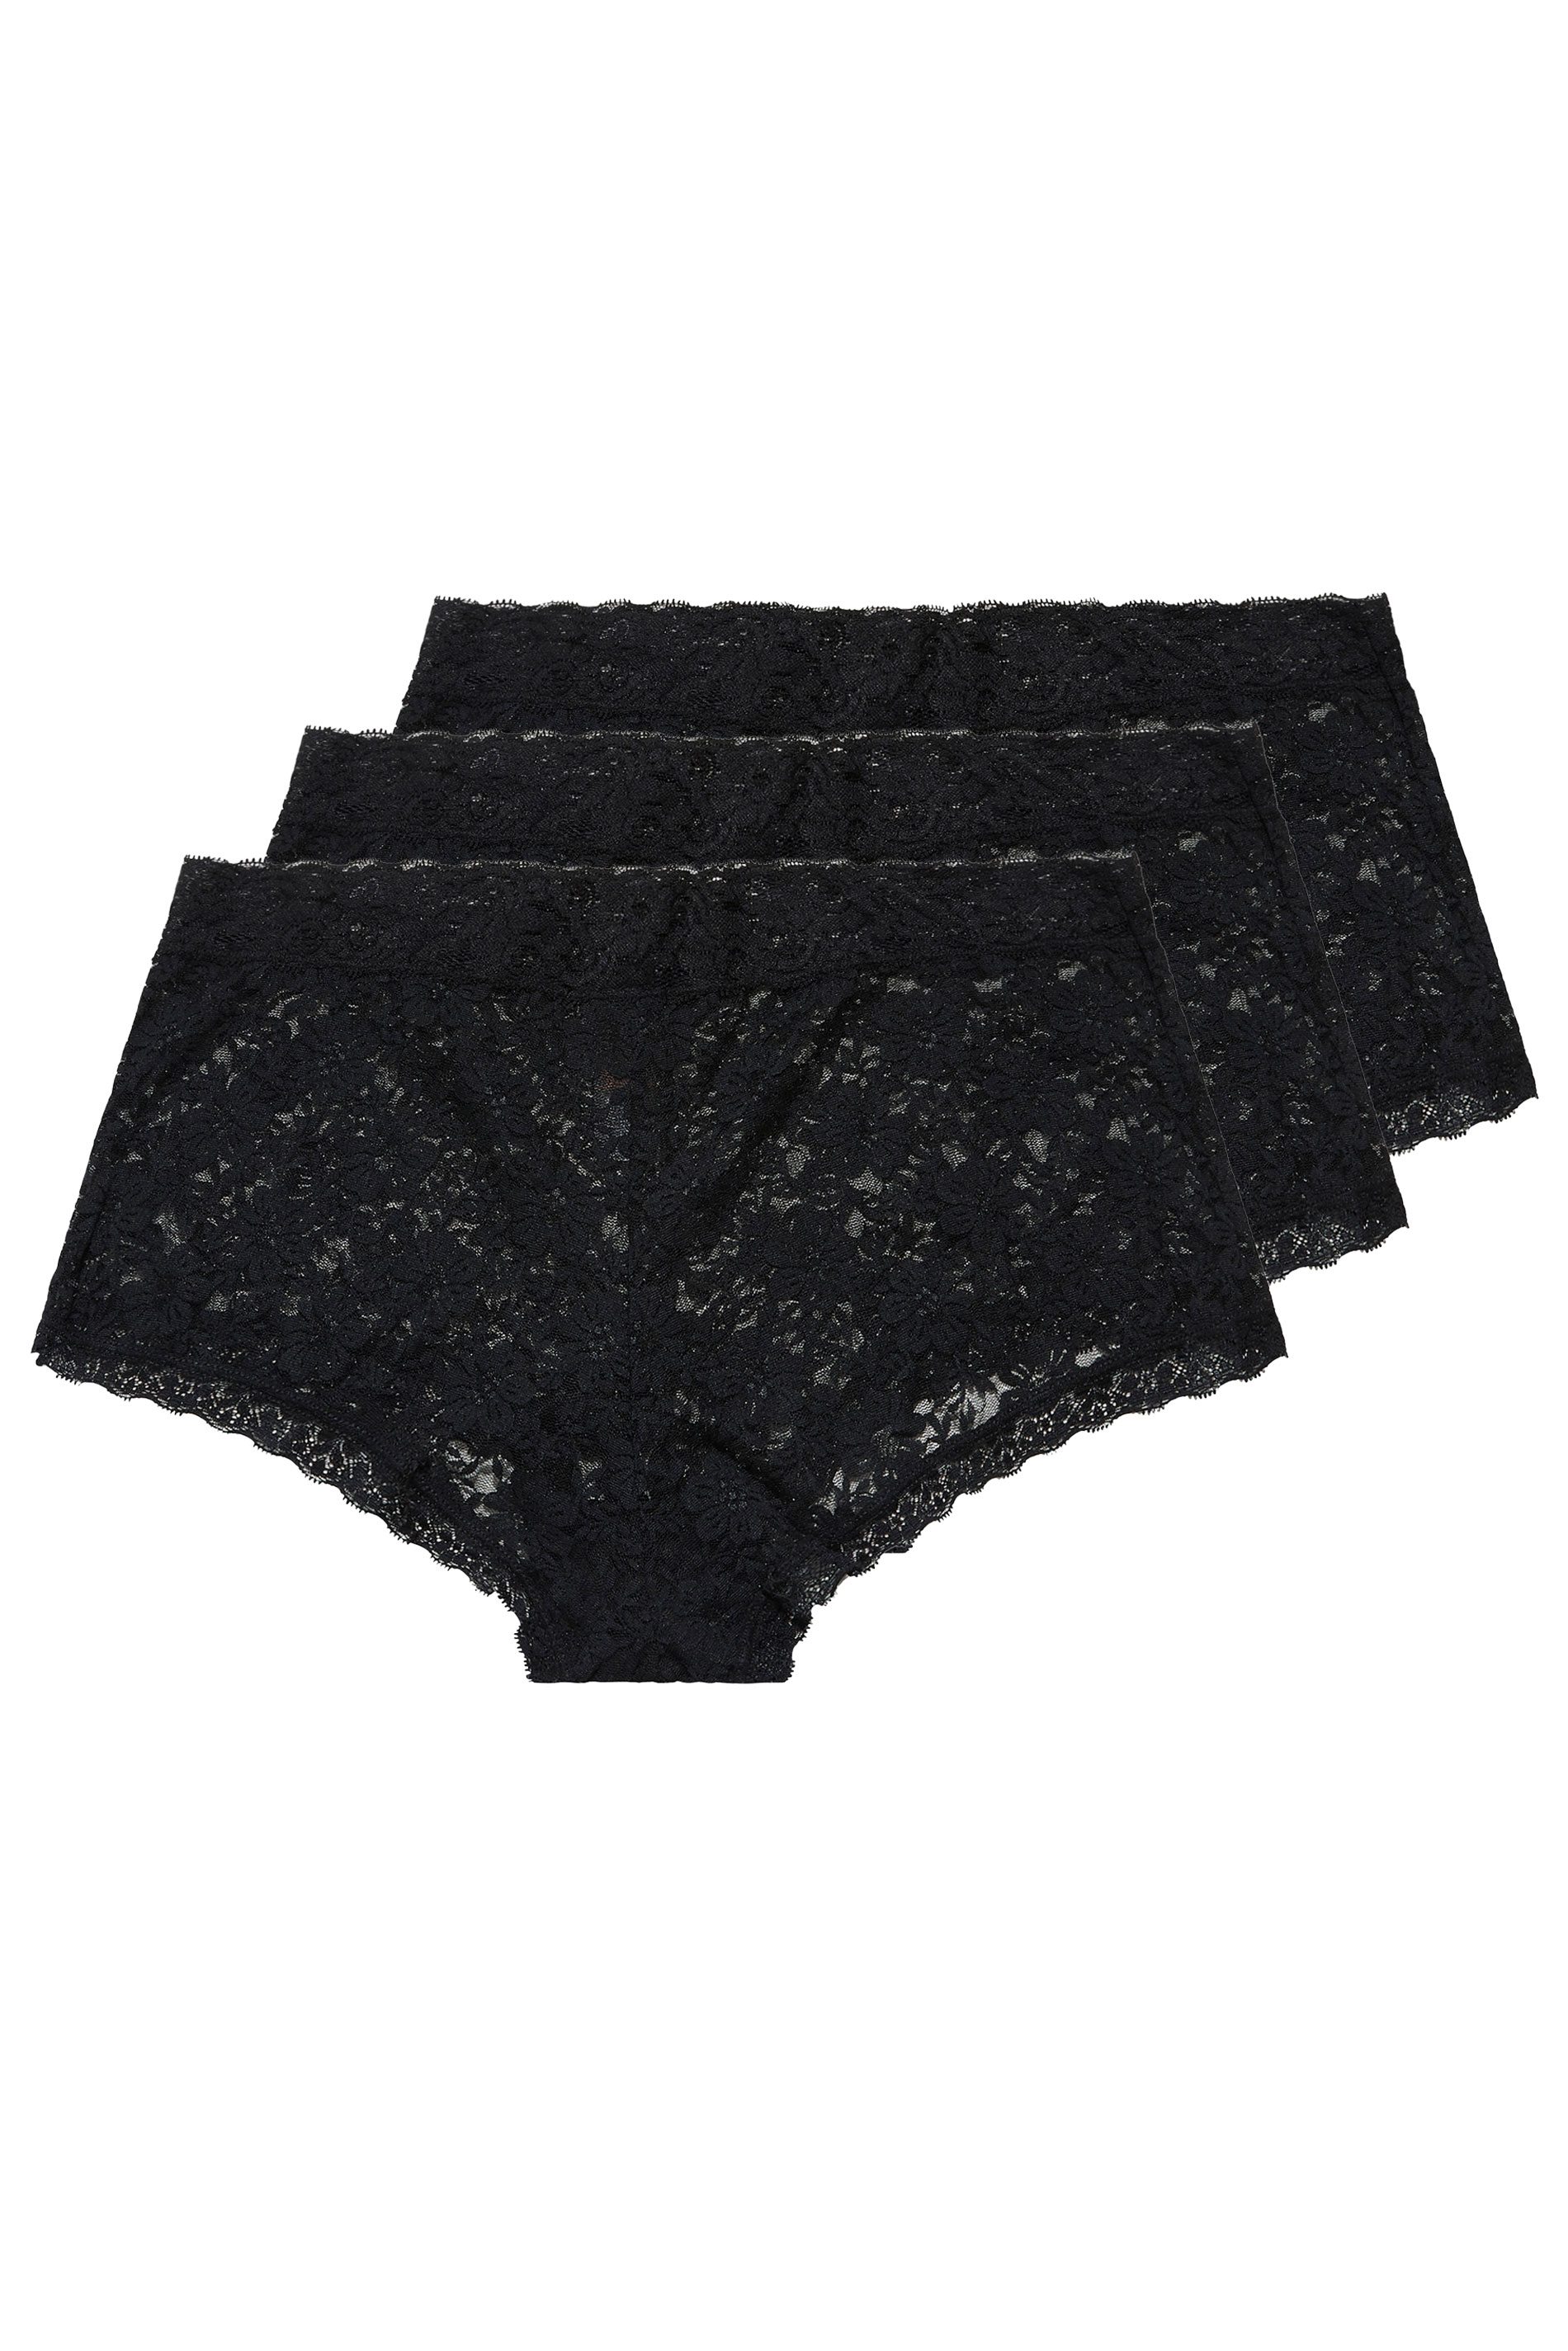 Grande taille  Lingerie Grande taille  Culottes et slips | 3 PACK Curve Black Lace Shorts - DY91512